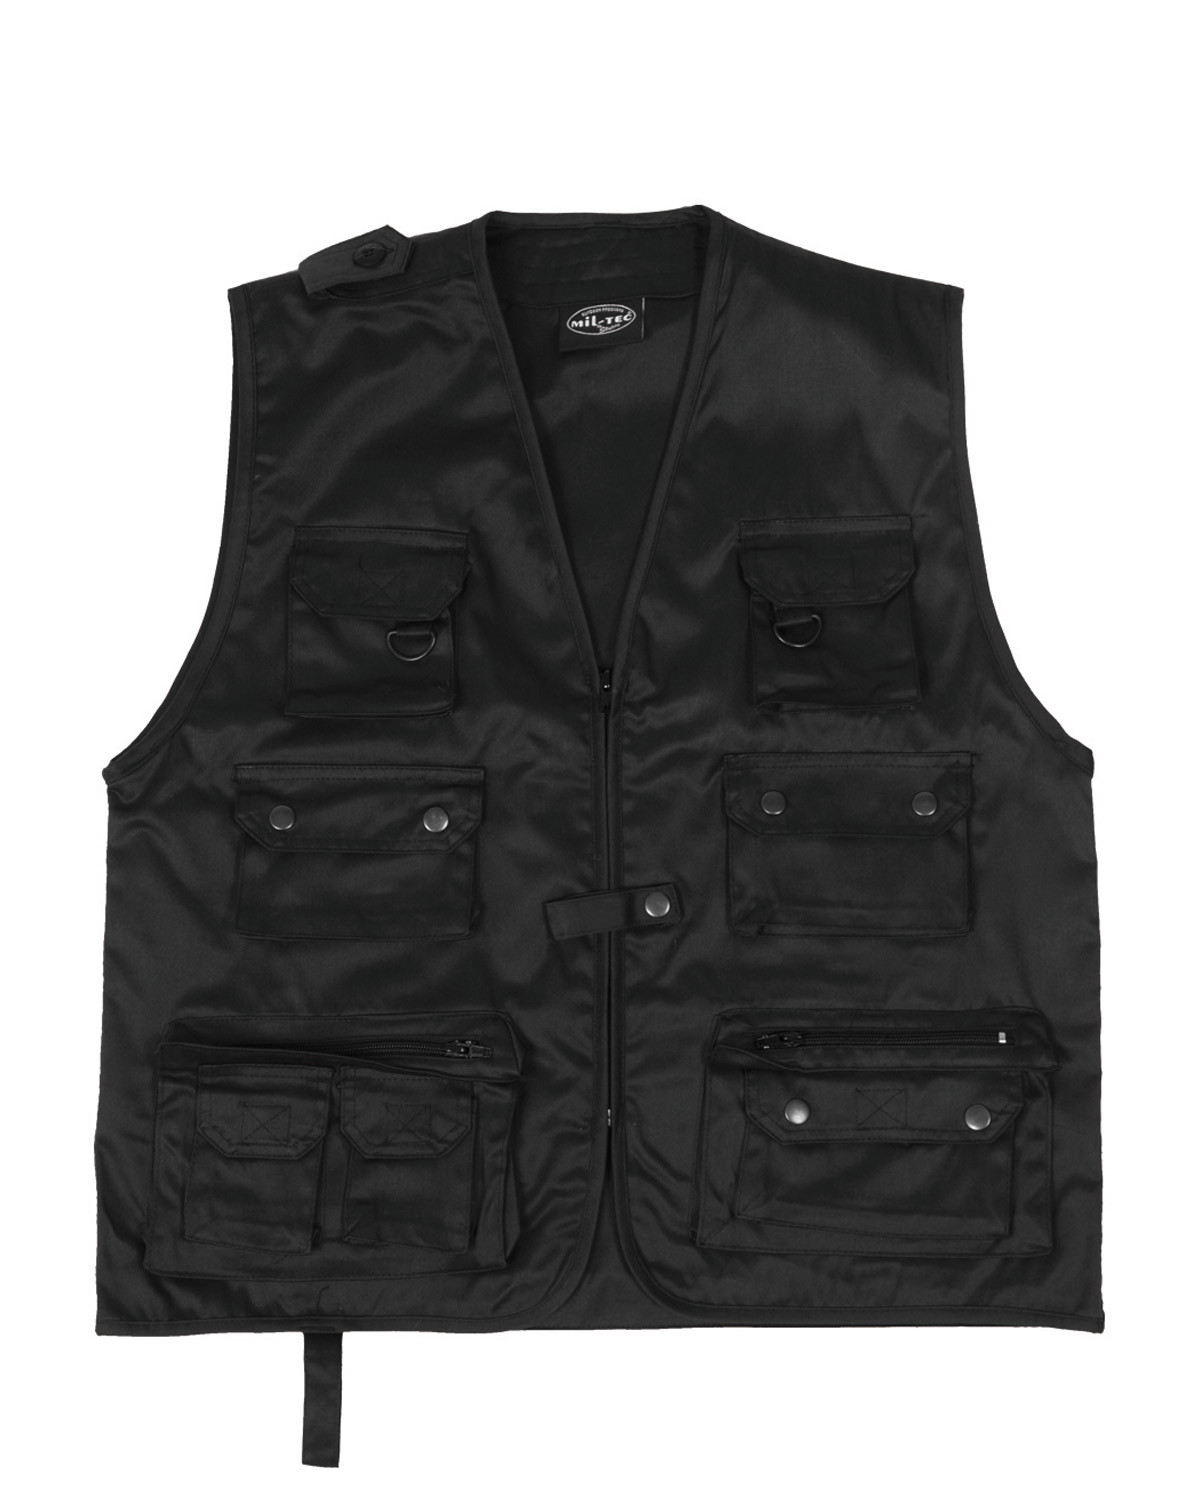 4: Mil-Tec Hunters Vest (Sort, XL)